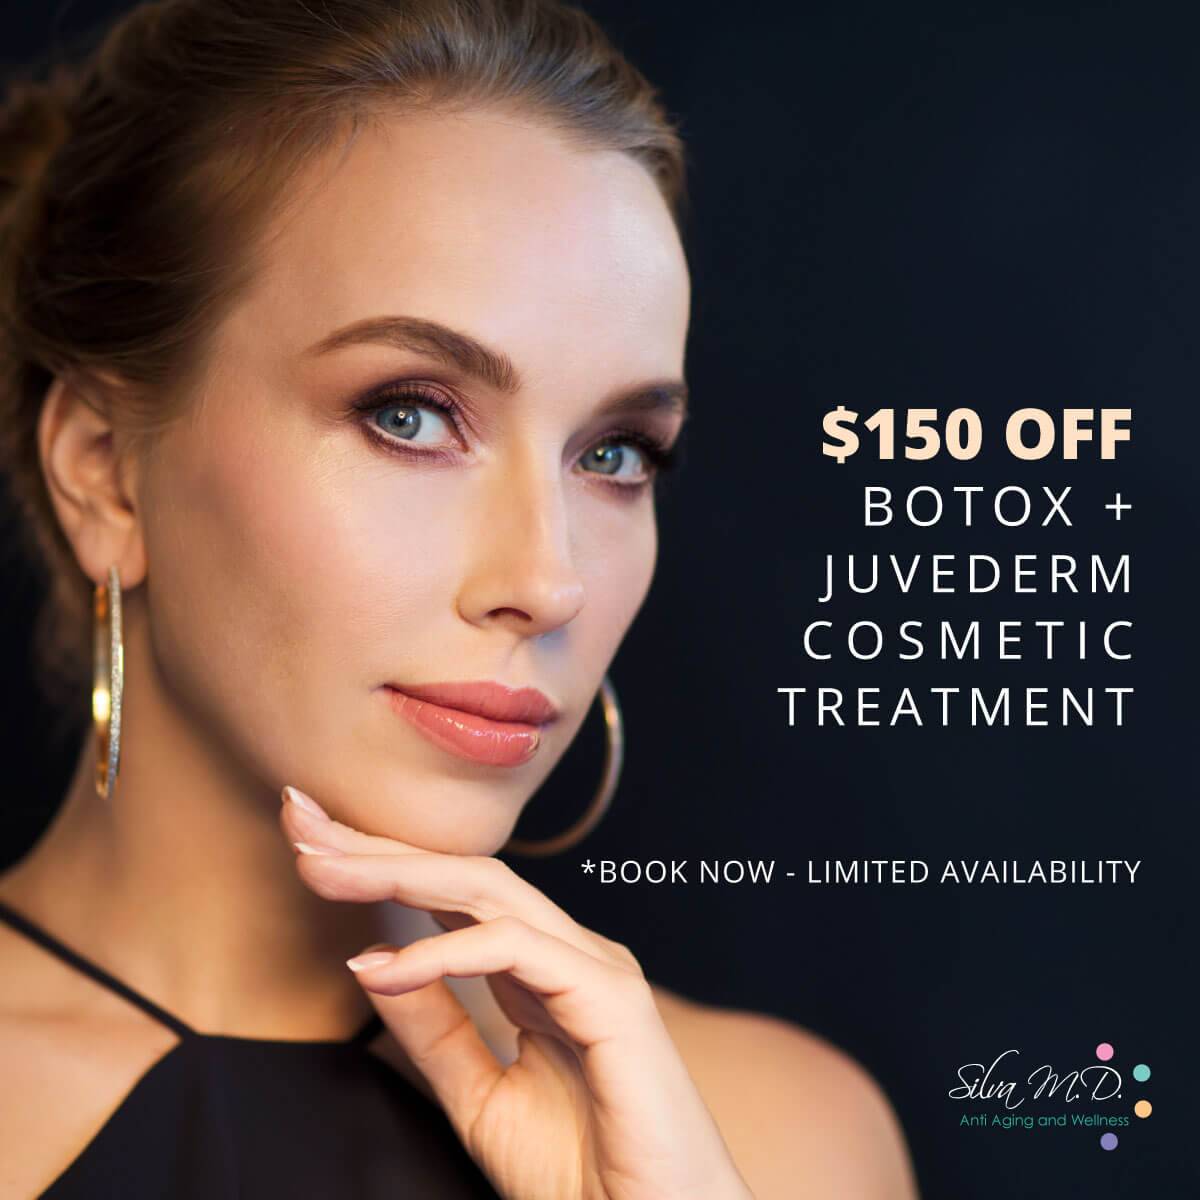 Dr. Melinda Silva $150 off Botox + Juvederm Cosmetic Treatment.